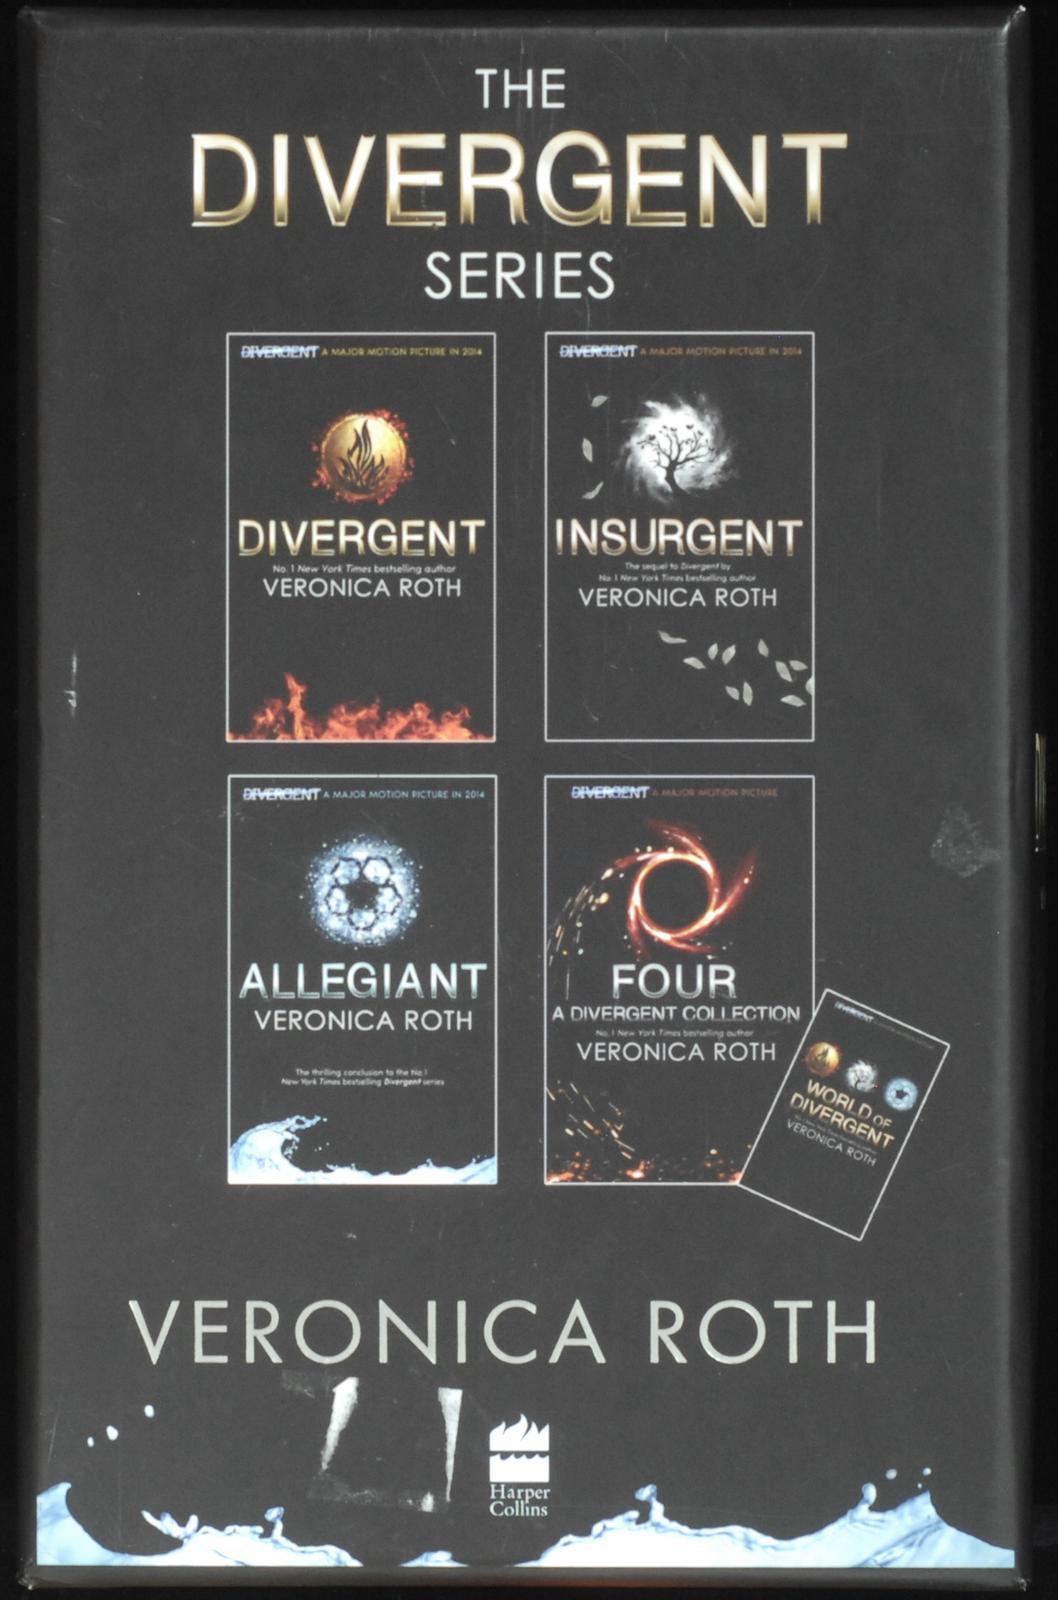 mbb006205d_-_Roth_Veronica_-_The_Divergent_Series.jpg